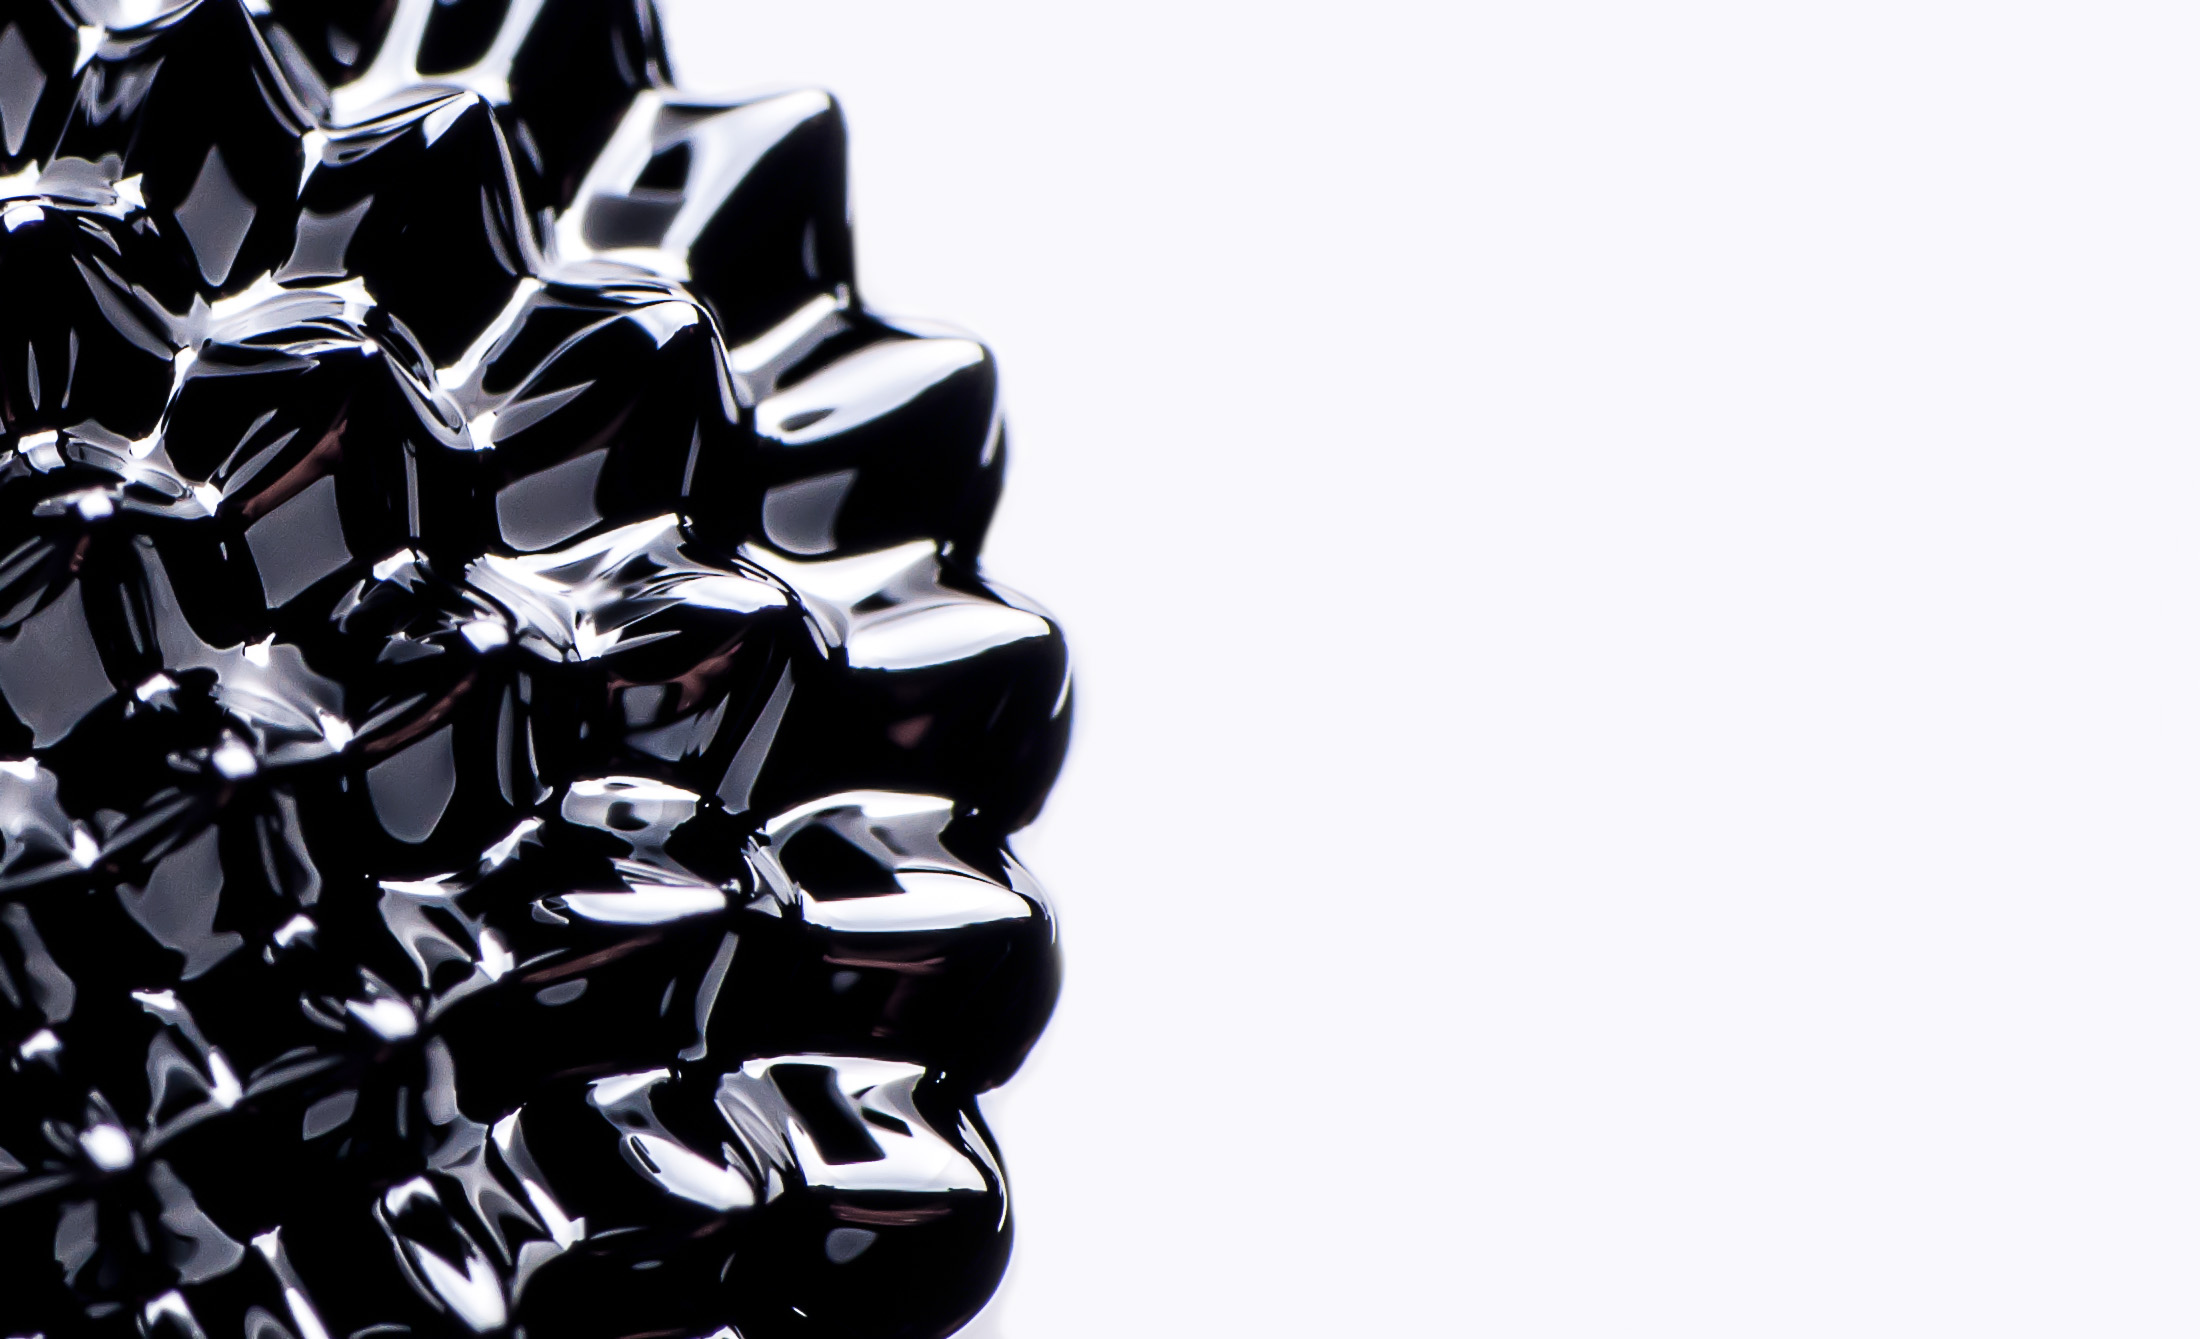 Ferrofluid.jpg